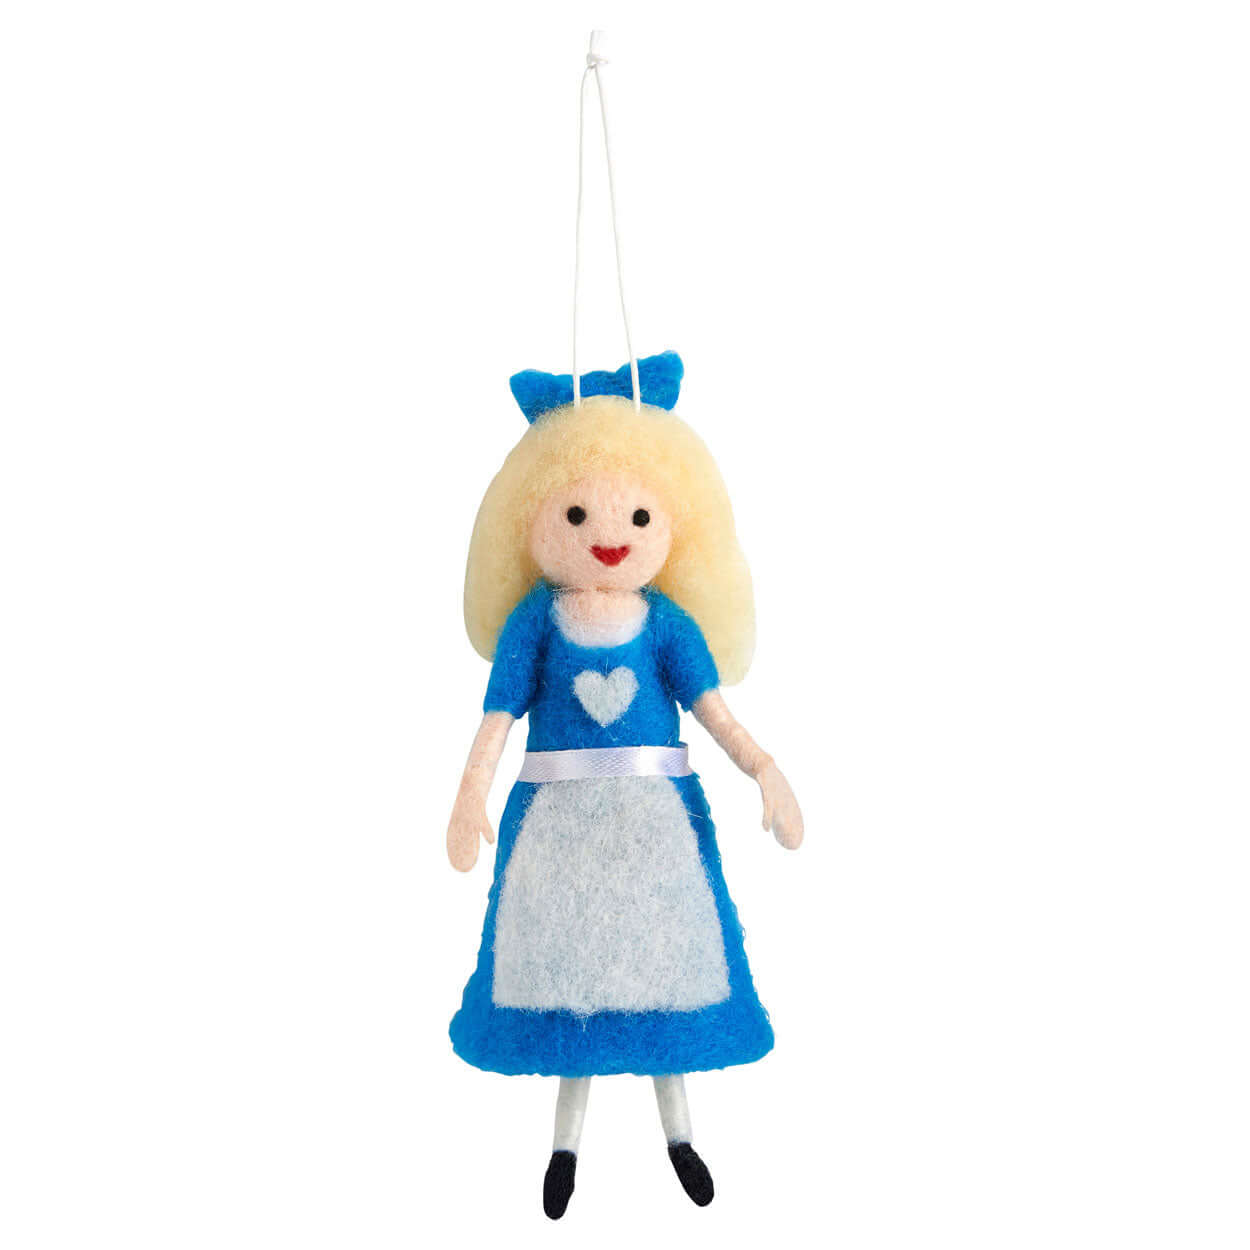 Hanging Decoration - Felt - Alice in Wonderland